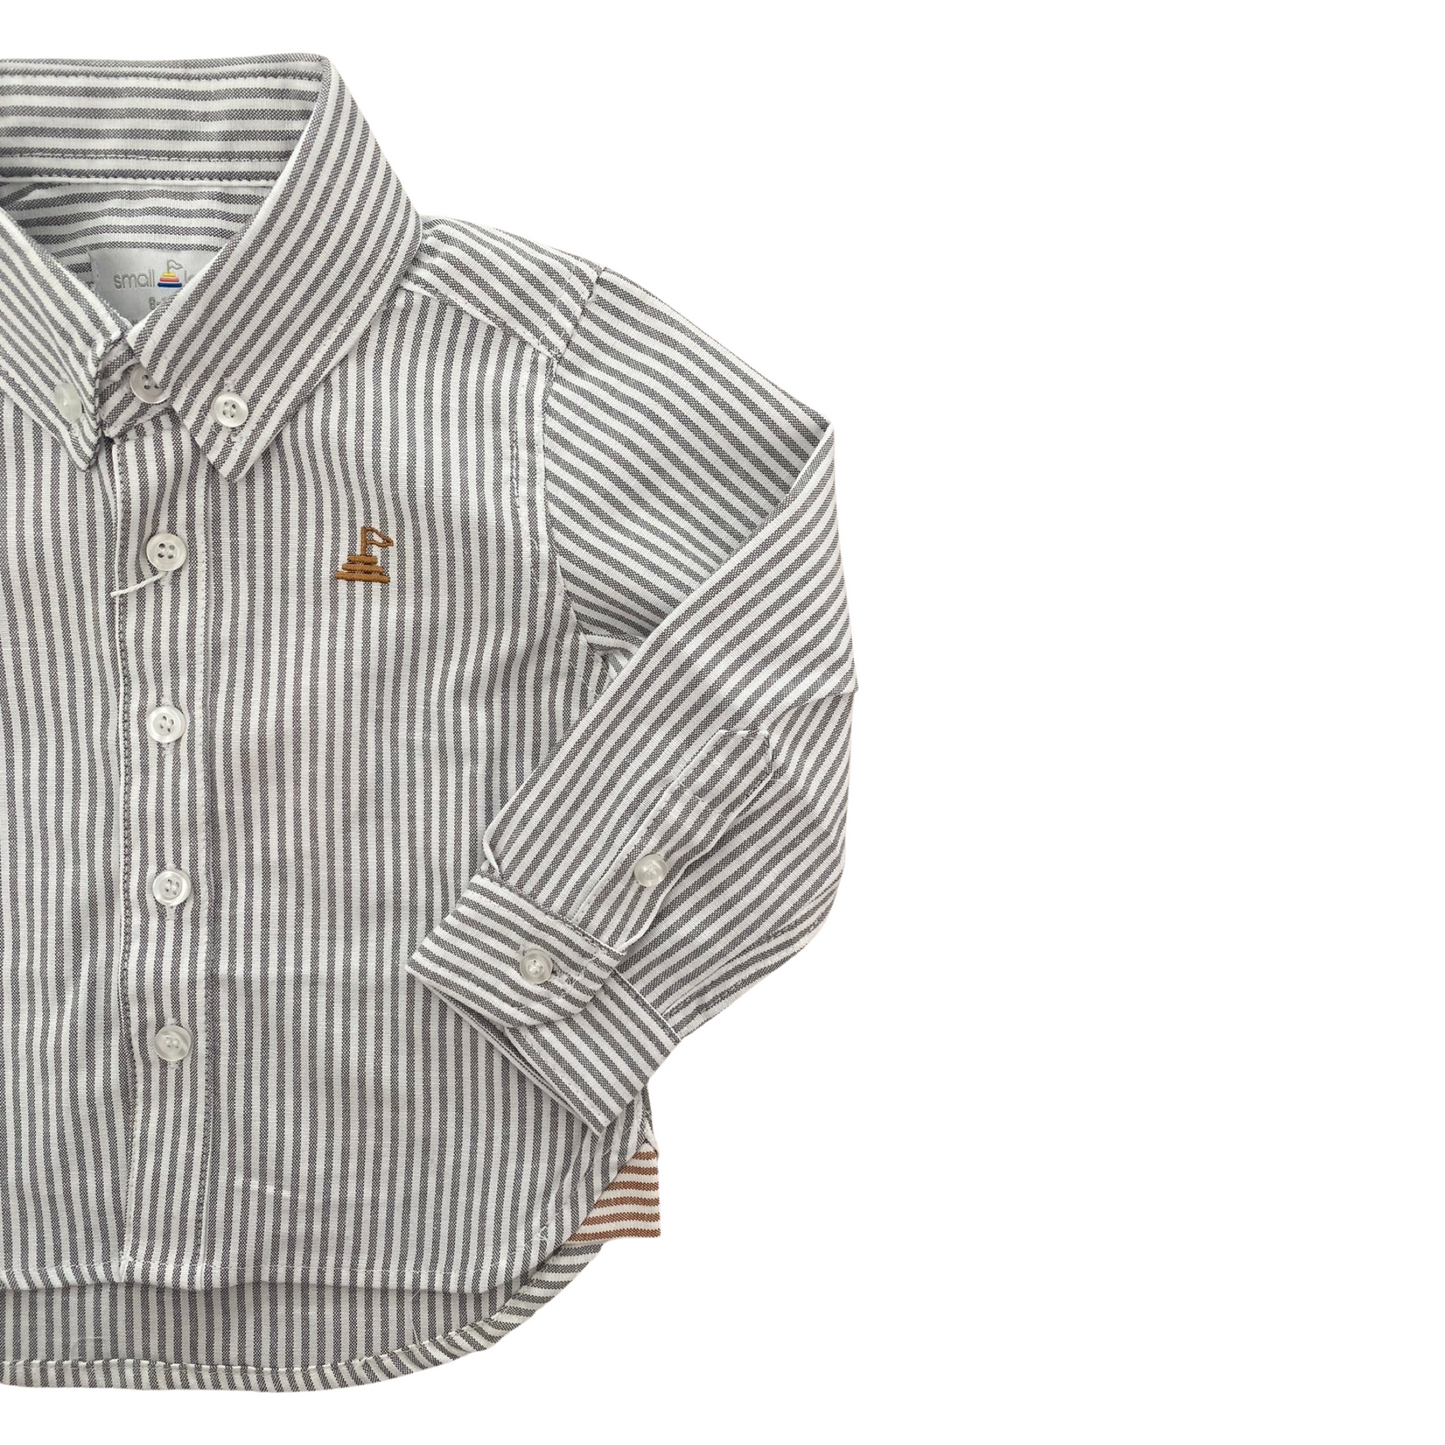 Boys Button-up Shirt - grey/white pinstripe